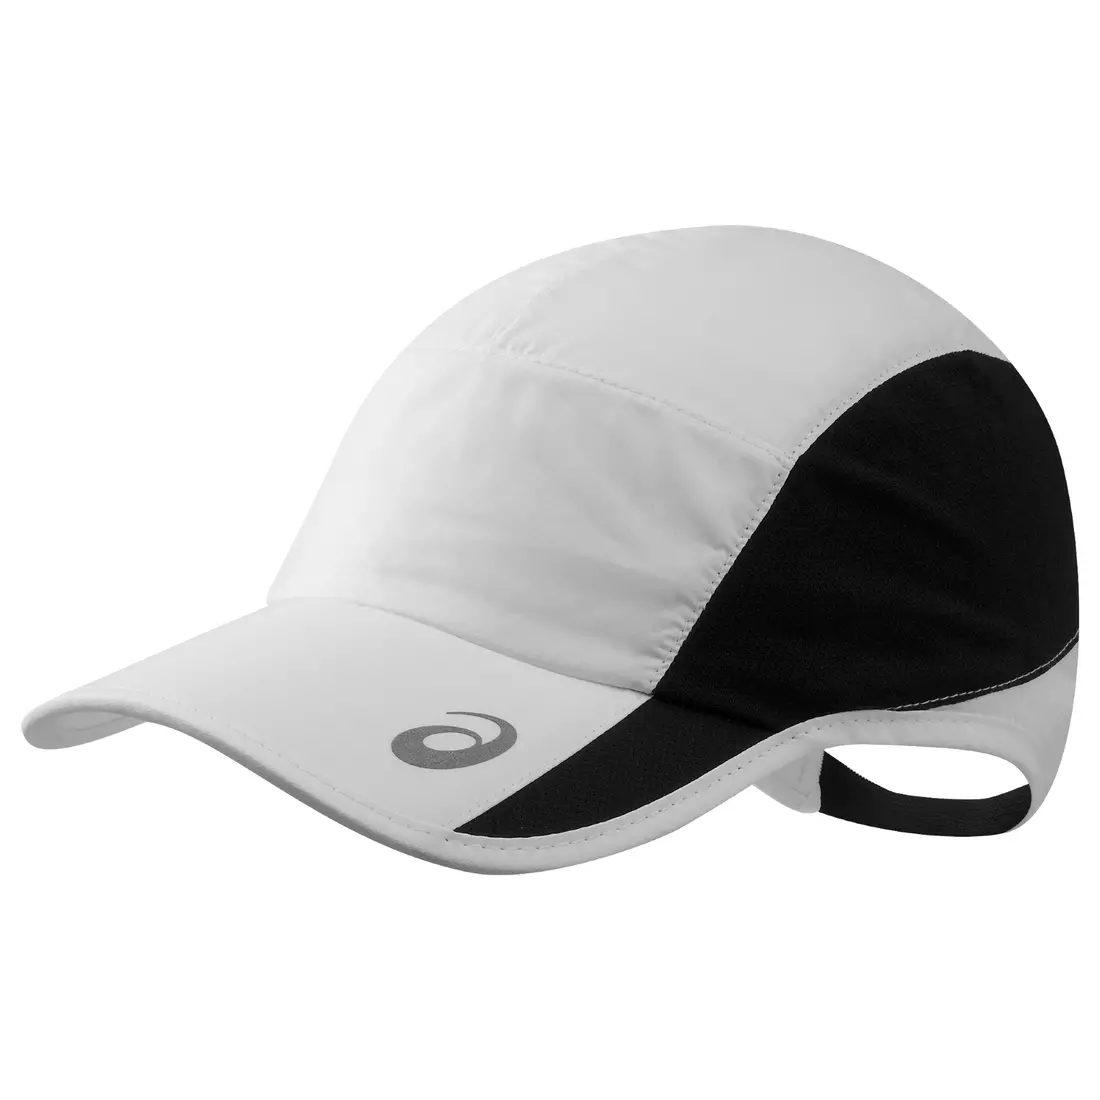 ASICS SS17 PERFORMANCE baseball cap REAL WHITE 132059 0001